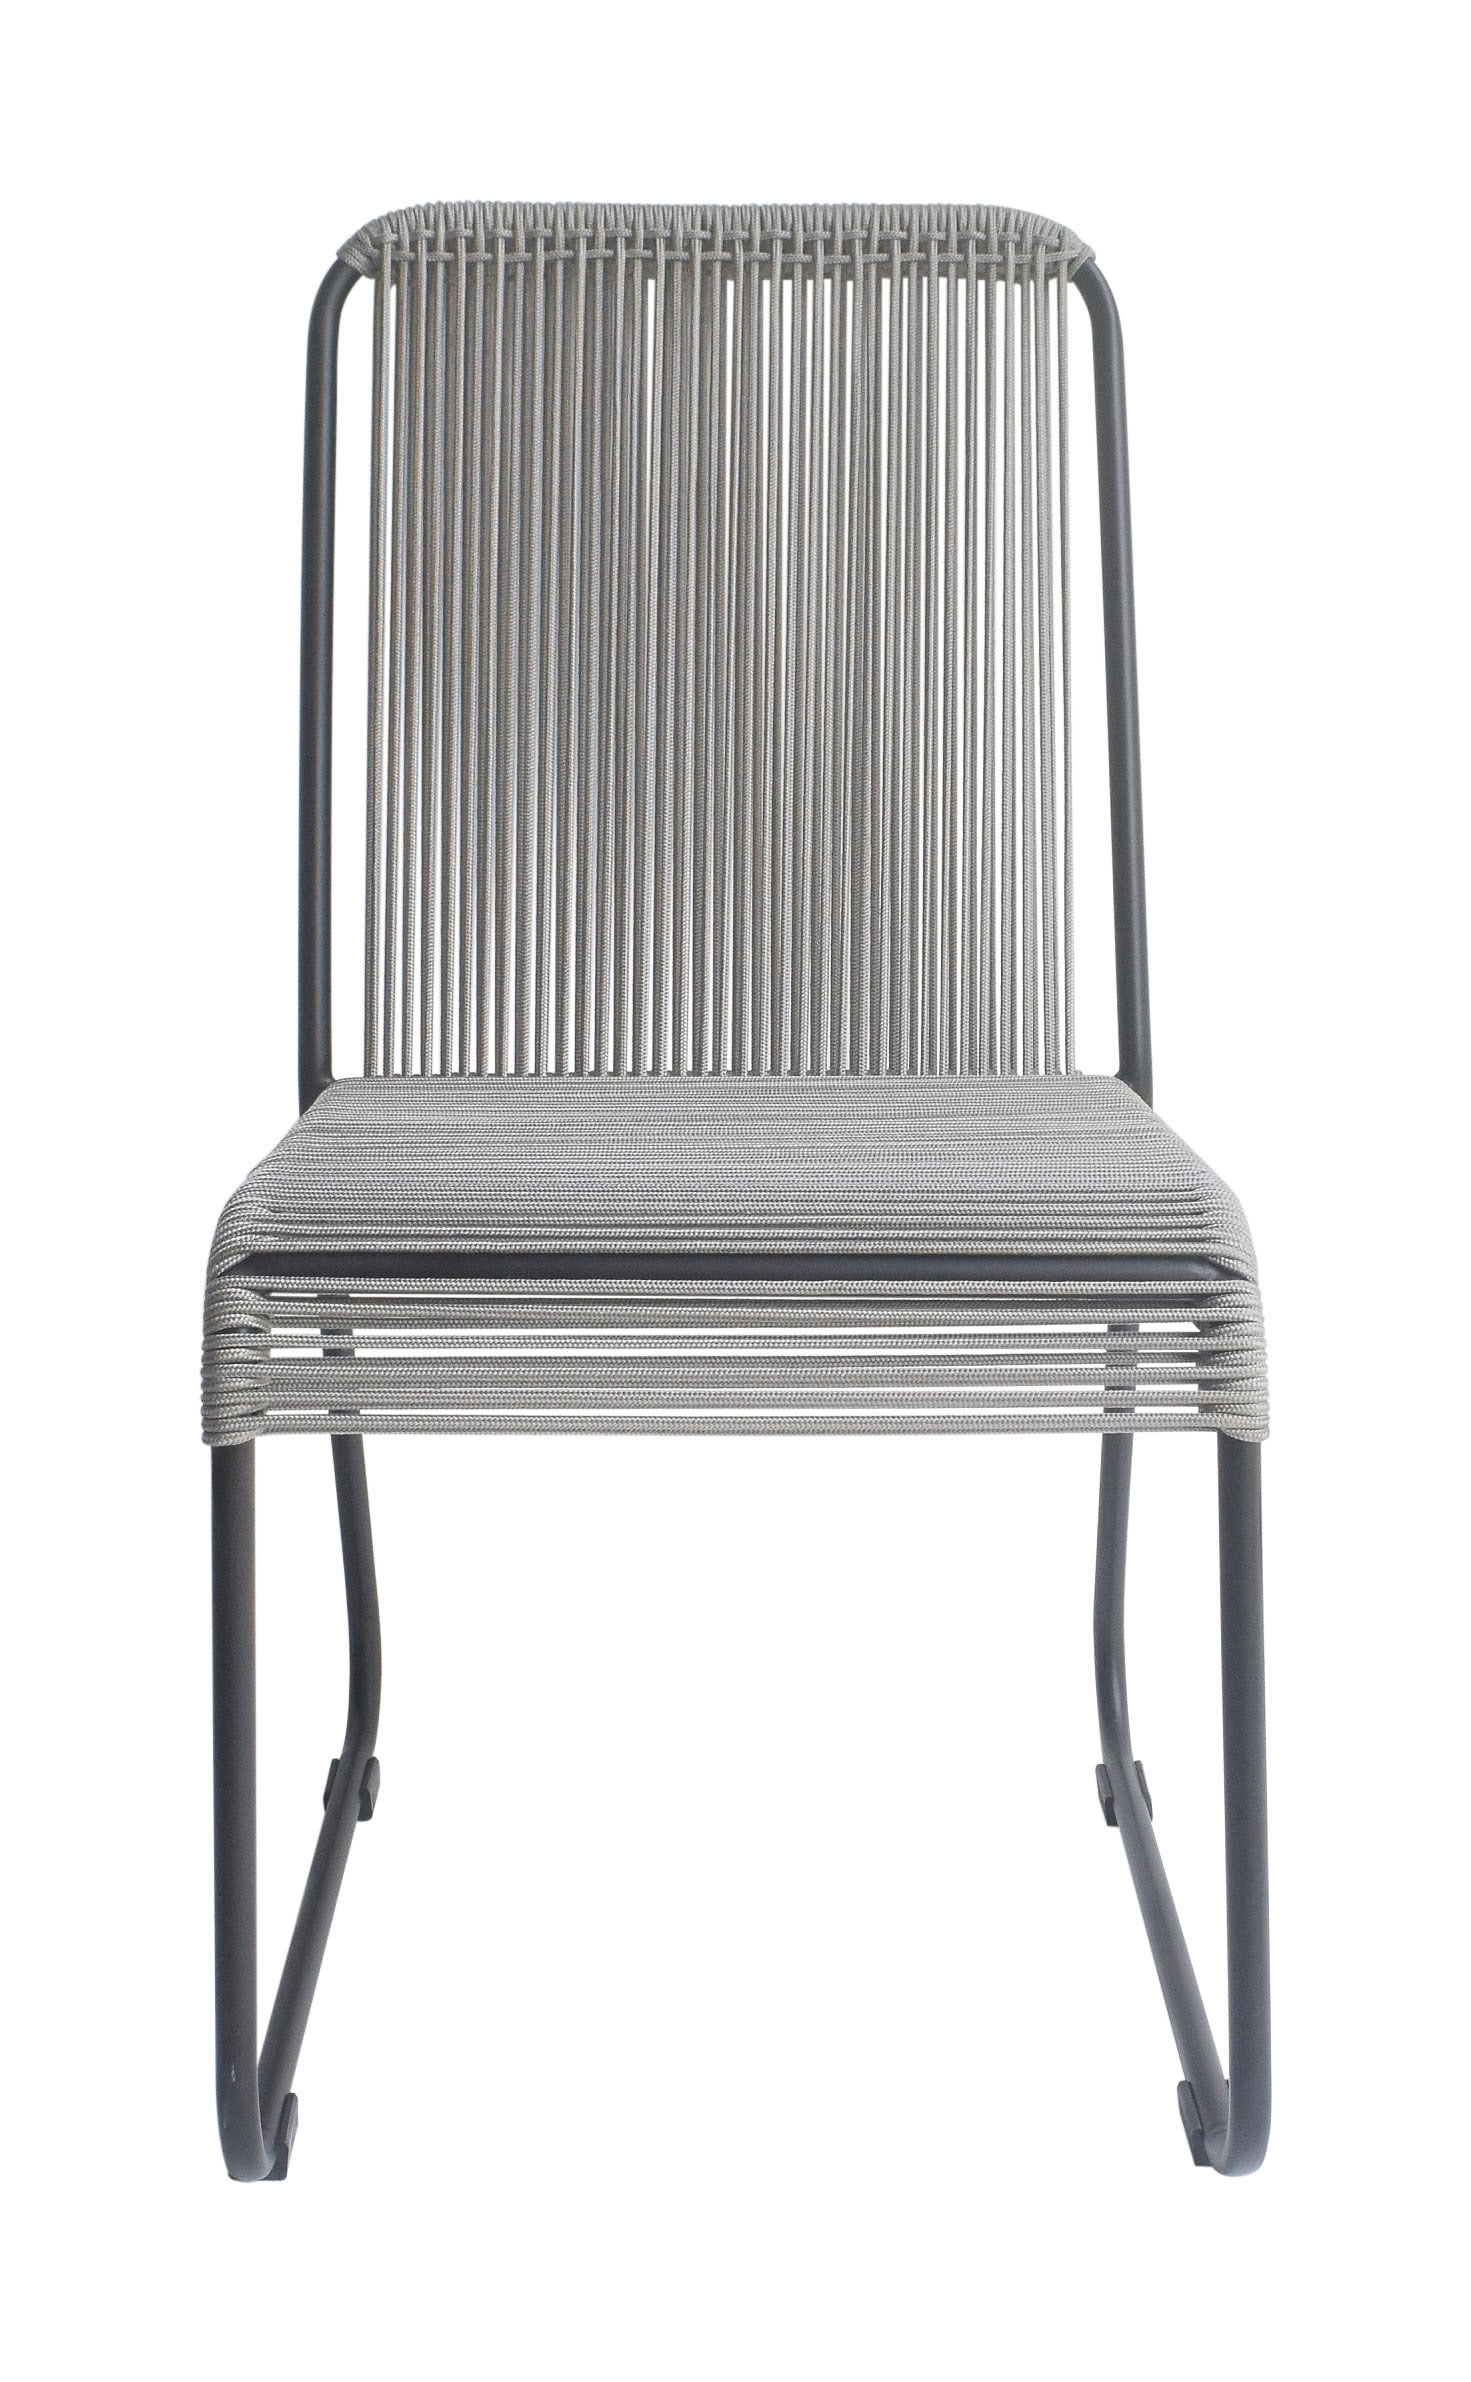 18.9" x 25.2" x 36.2" Black & Dark Gray, Steel & Rope, Dining Chair - Set of 2